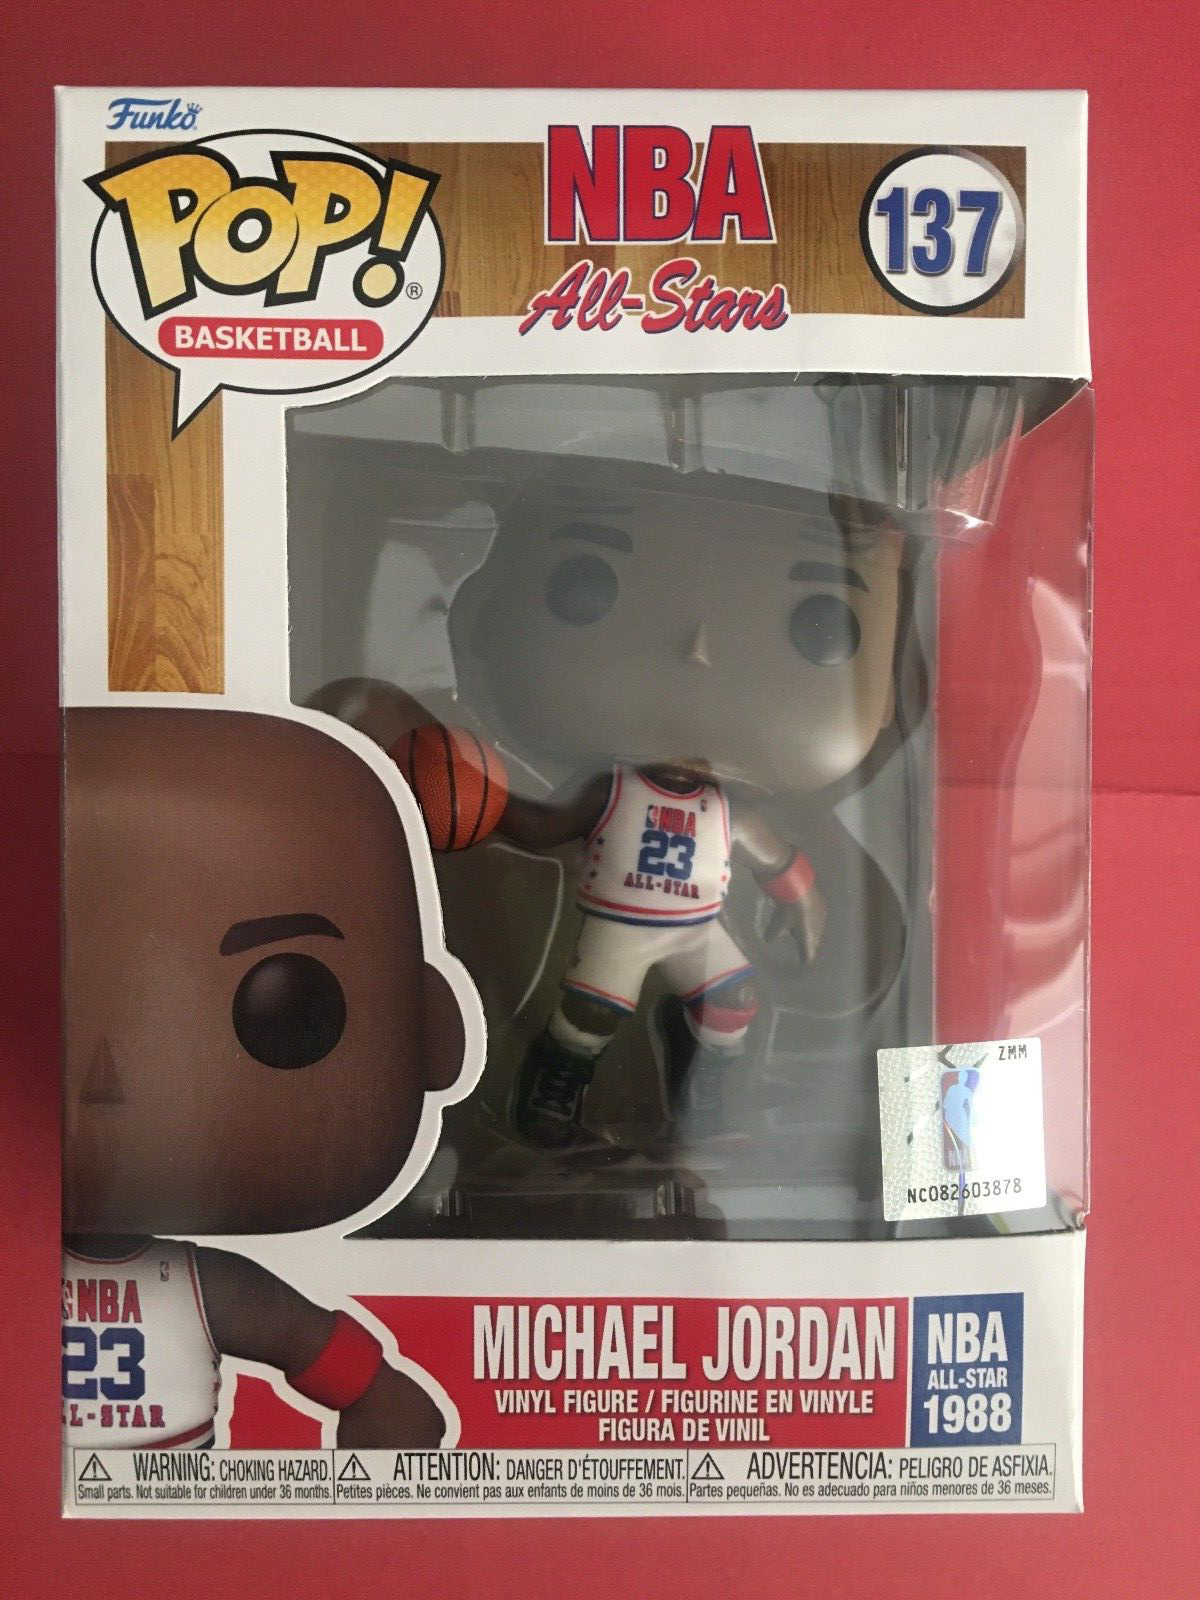 Funko Pop NBA Legends Michael Jordan All-Star 1988 Pop Vinyl Figure #137